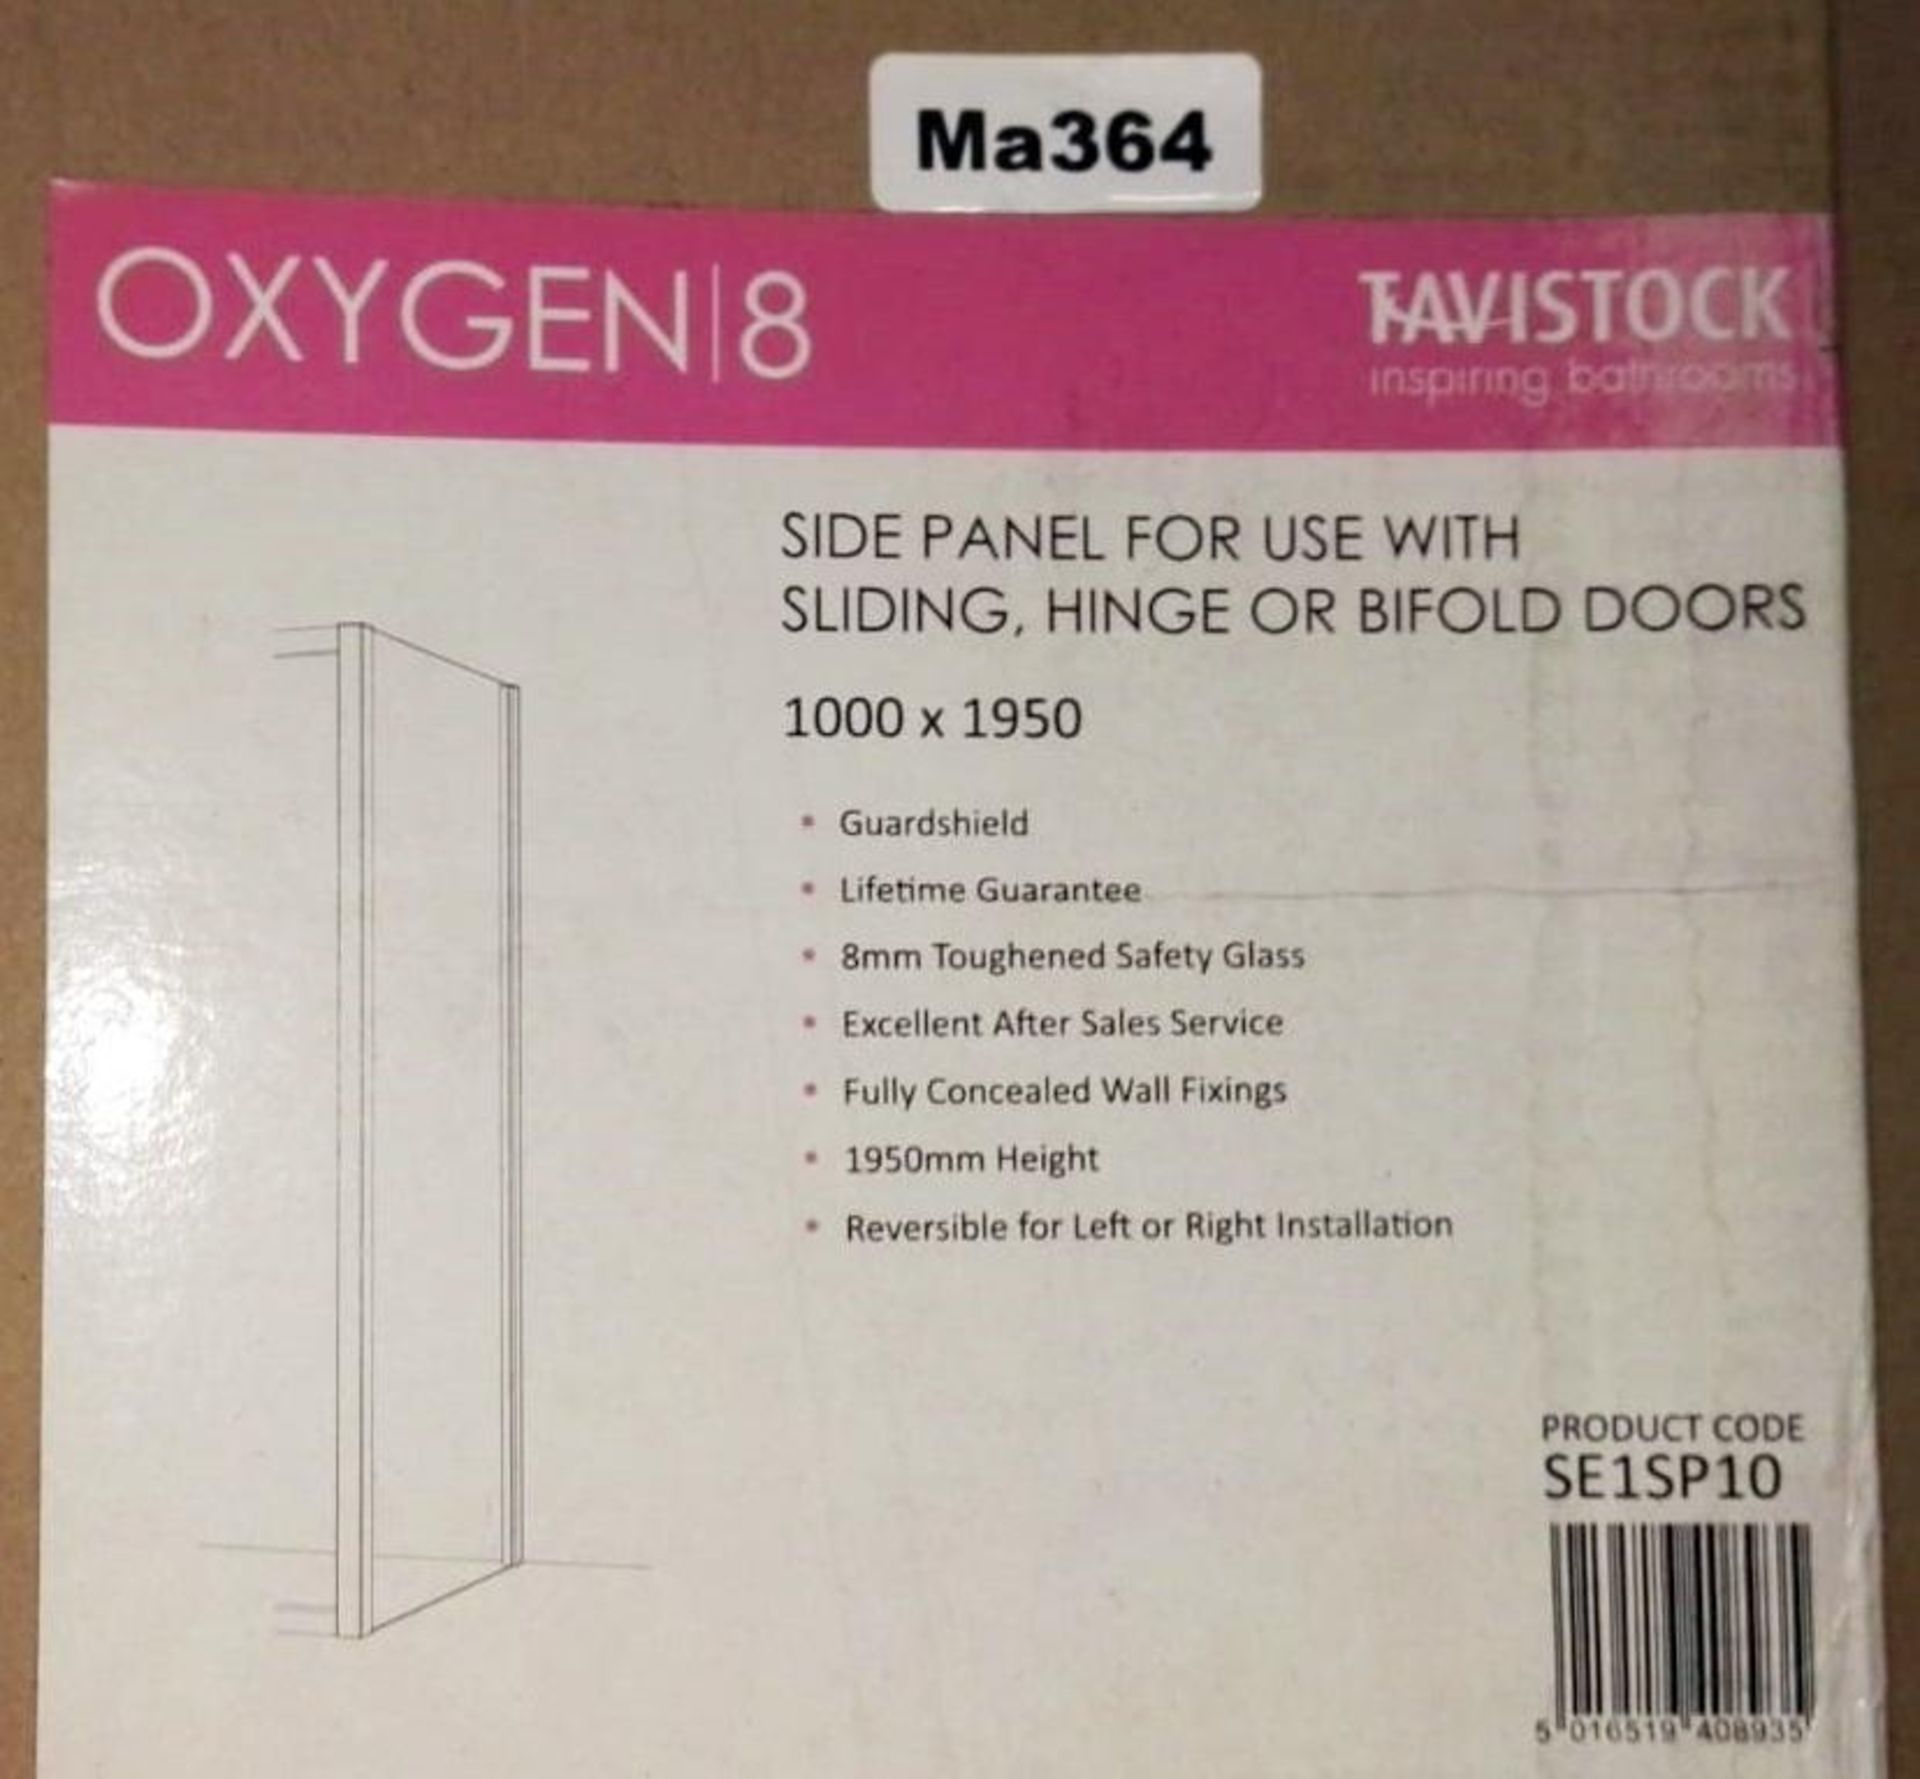 1 x Tavistock 'OXYGEN 8' Side Panel - Dimensions: 1000 x 1950 - Ref: ma364 - New / Boxed Stock - CL0 - Image 2 of 2